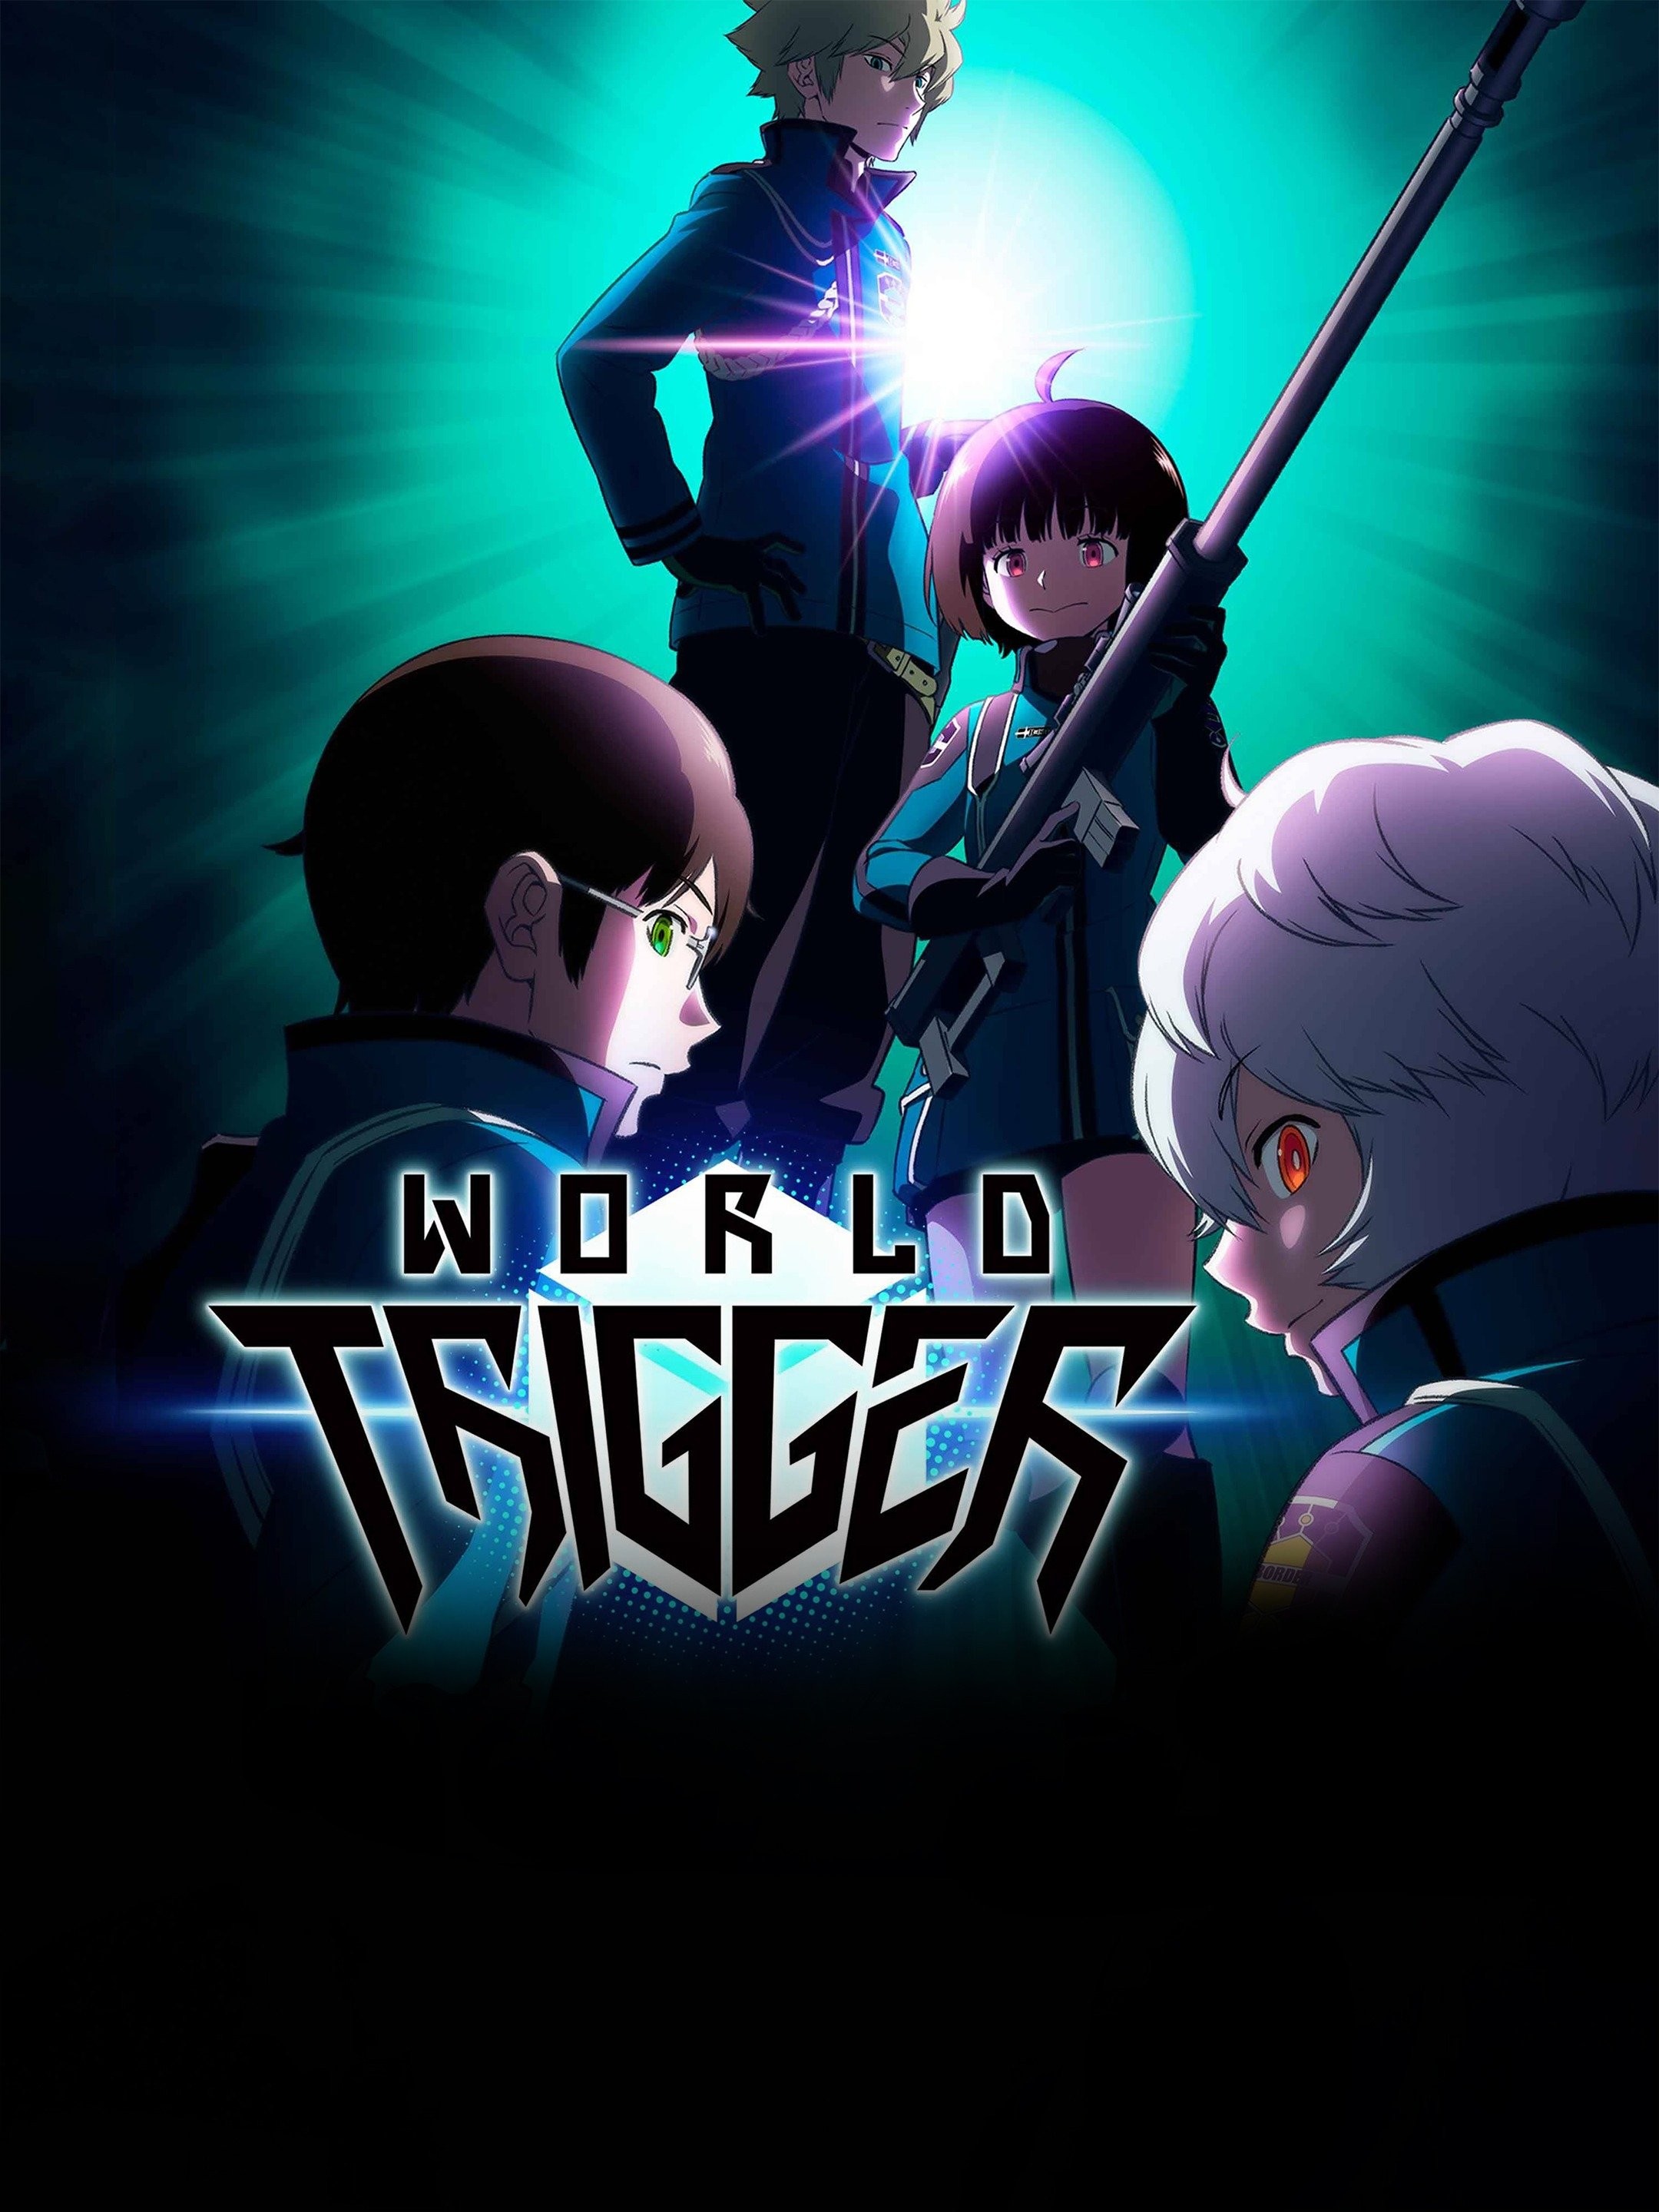 World Trigger, Osamu Mikumo's Ability